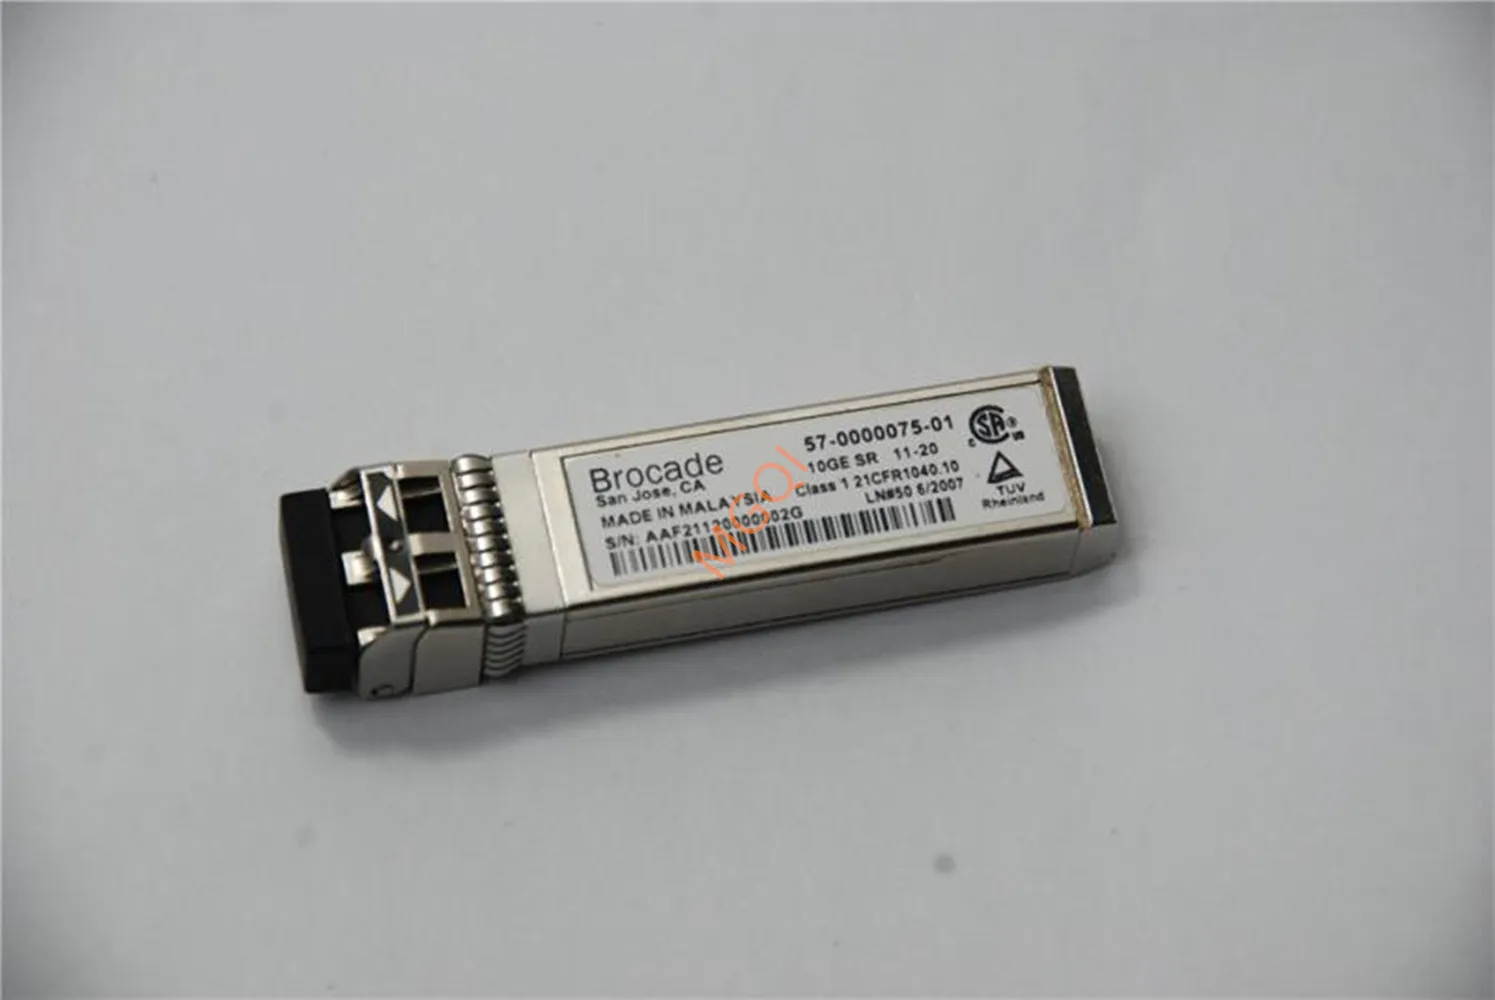 Brocade 10GB Transceiver 57-0000075-01/850nm 300M 10G SR SFP/Network Adapter Switch Optical Fiber Module/Switches Port Module 1pcs h pe sfp 10g transceiver 455883 b21 455885 001 456096 001 nc523 560flr nc530 gen9 10gb fiber module port switch